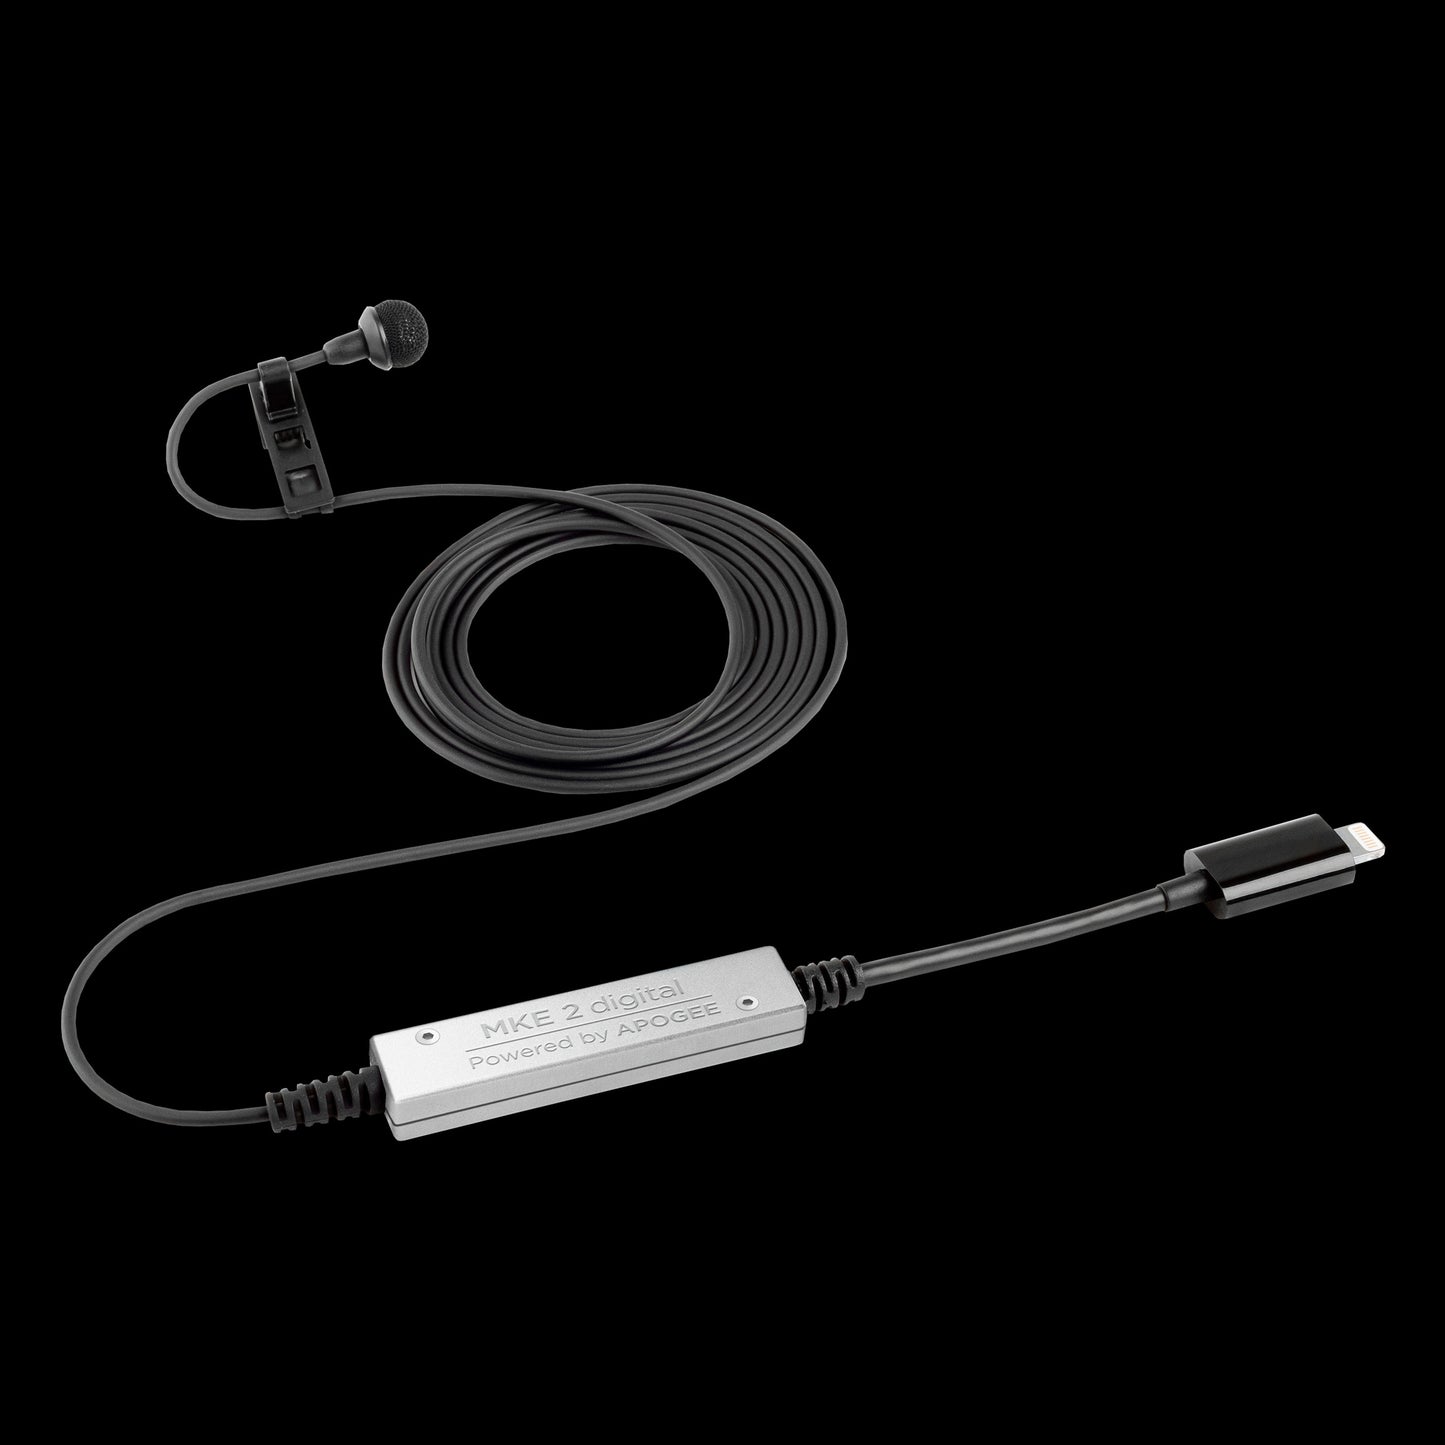 Sennheiser MKE 2 DIgital Clip-On Condenser Microphone for iOS Devices (MKE2DIGITALSET)